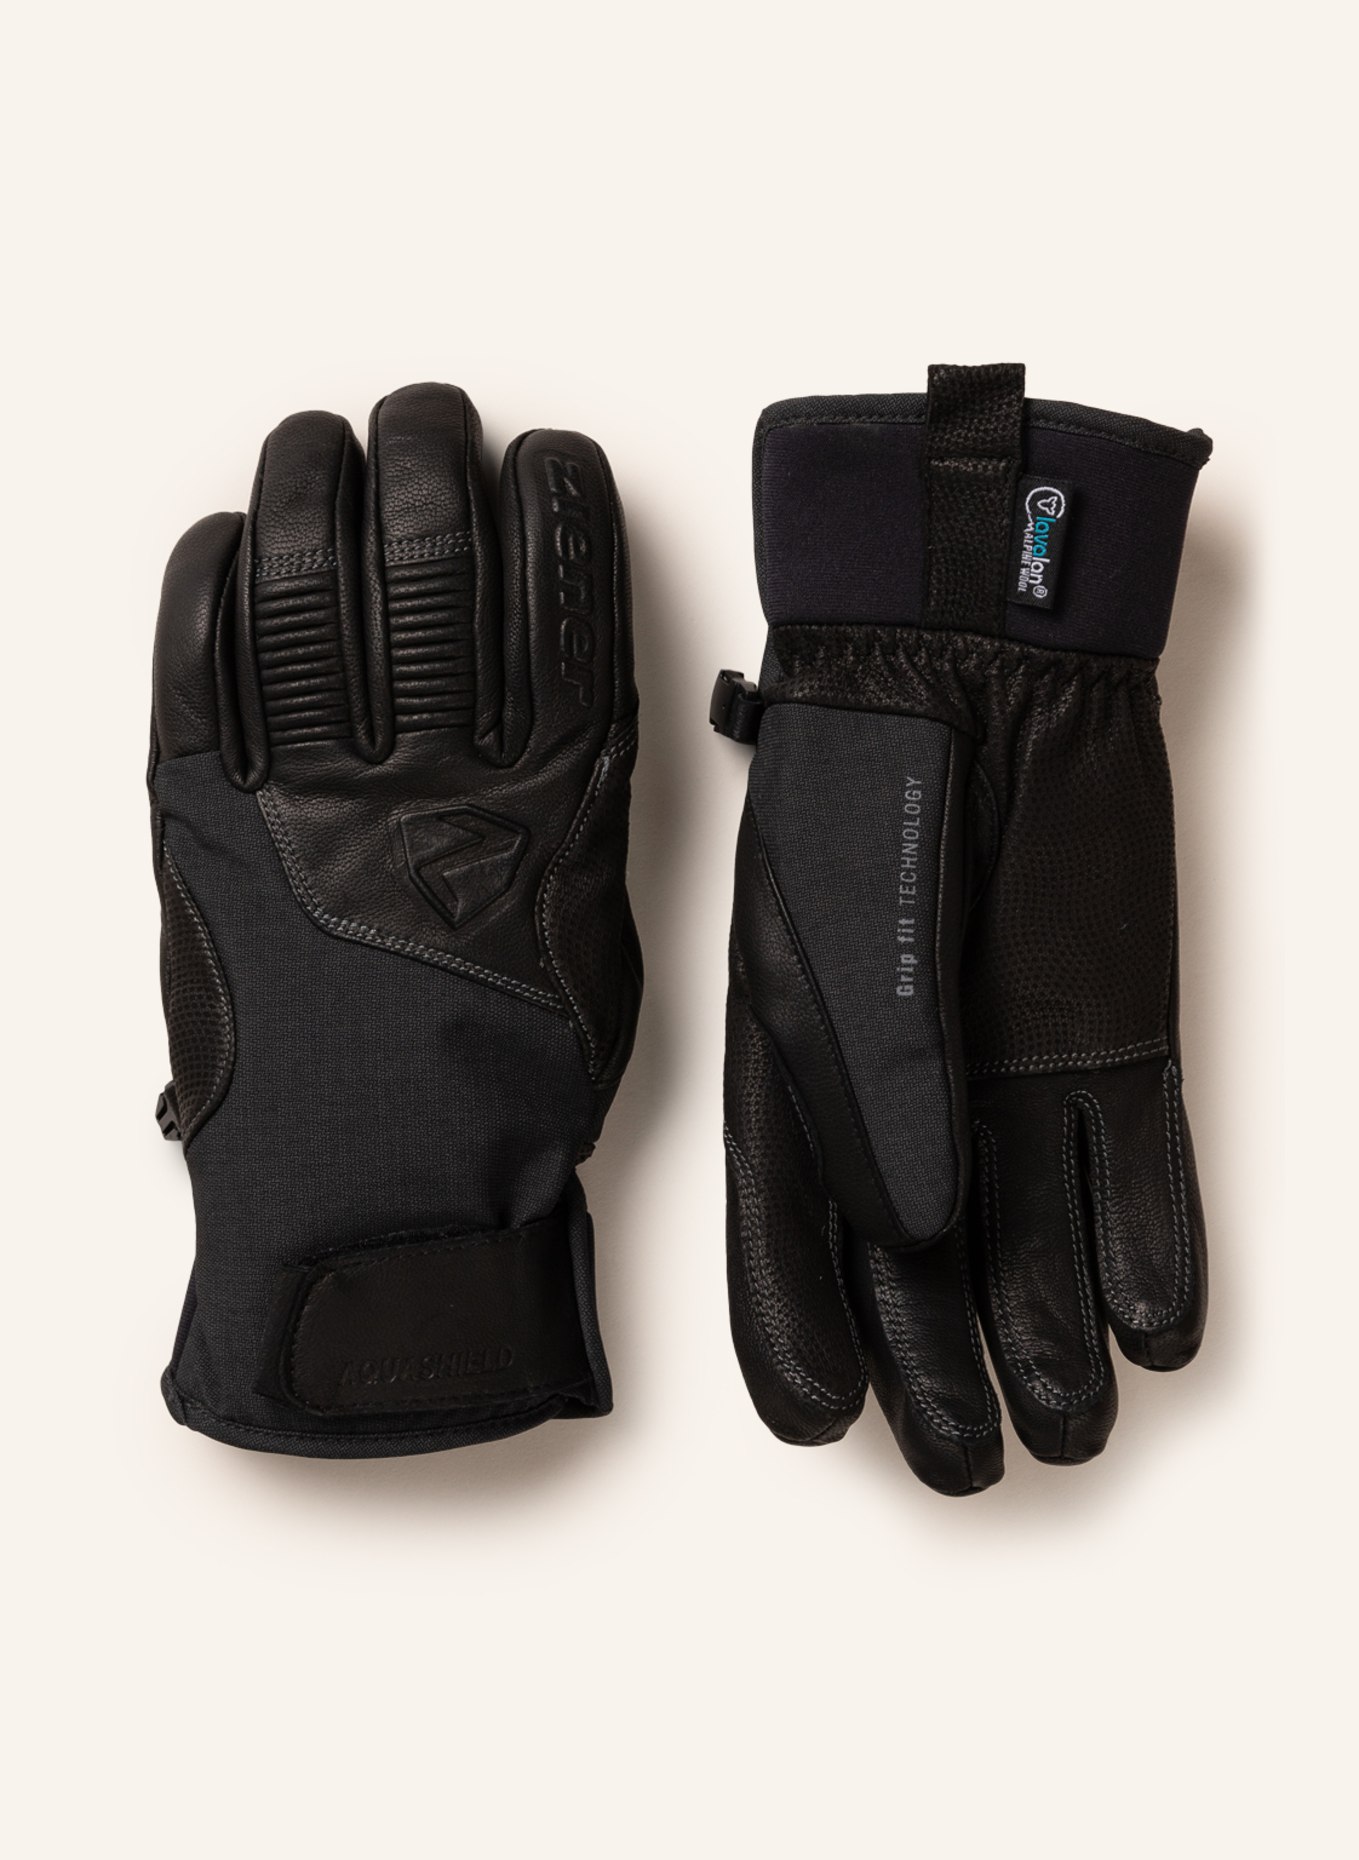 in gray black/ GANZENBERG gloves dark ziener Ski